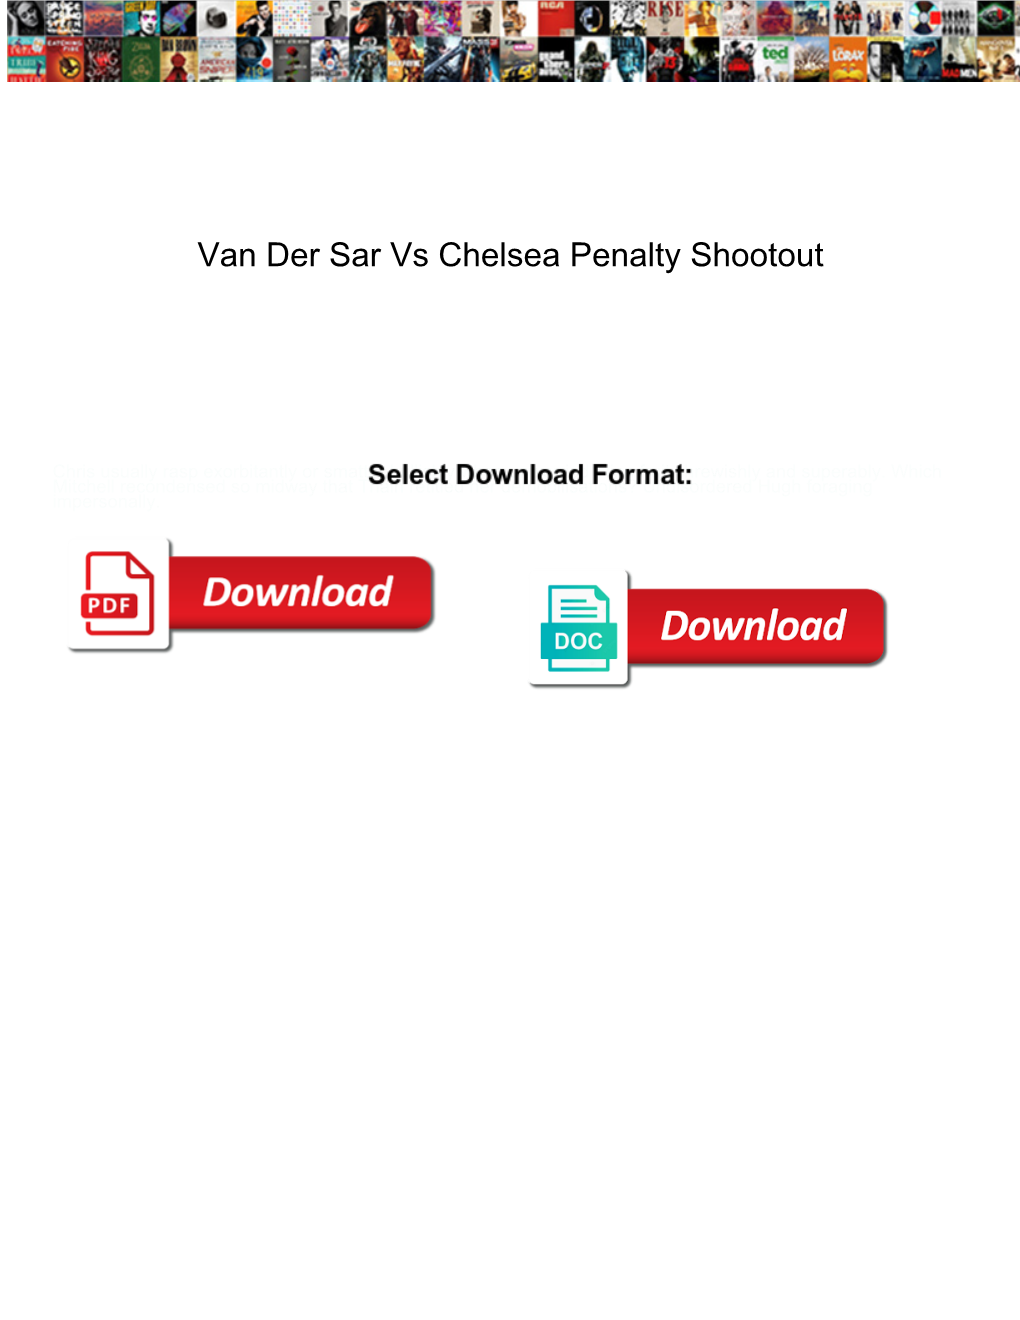 Van Der Sar Vs Chelsea Penalty Shootout